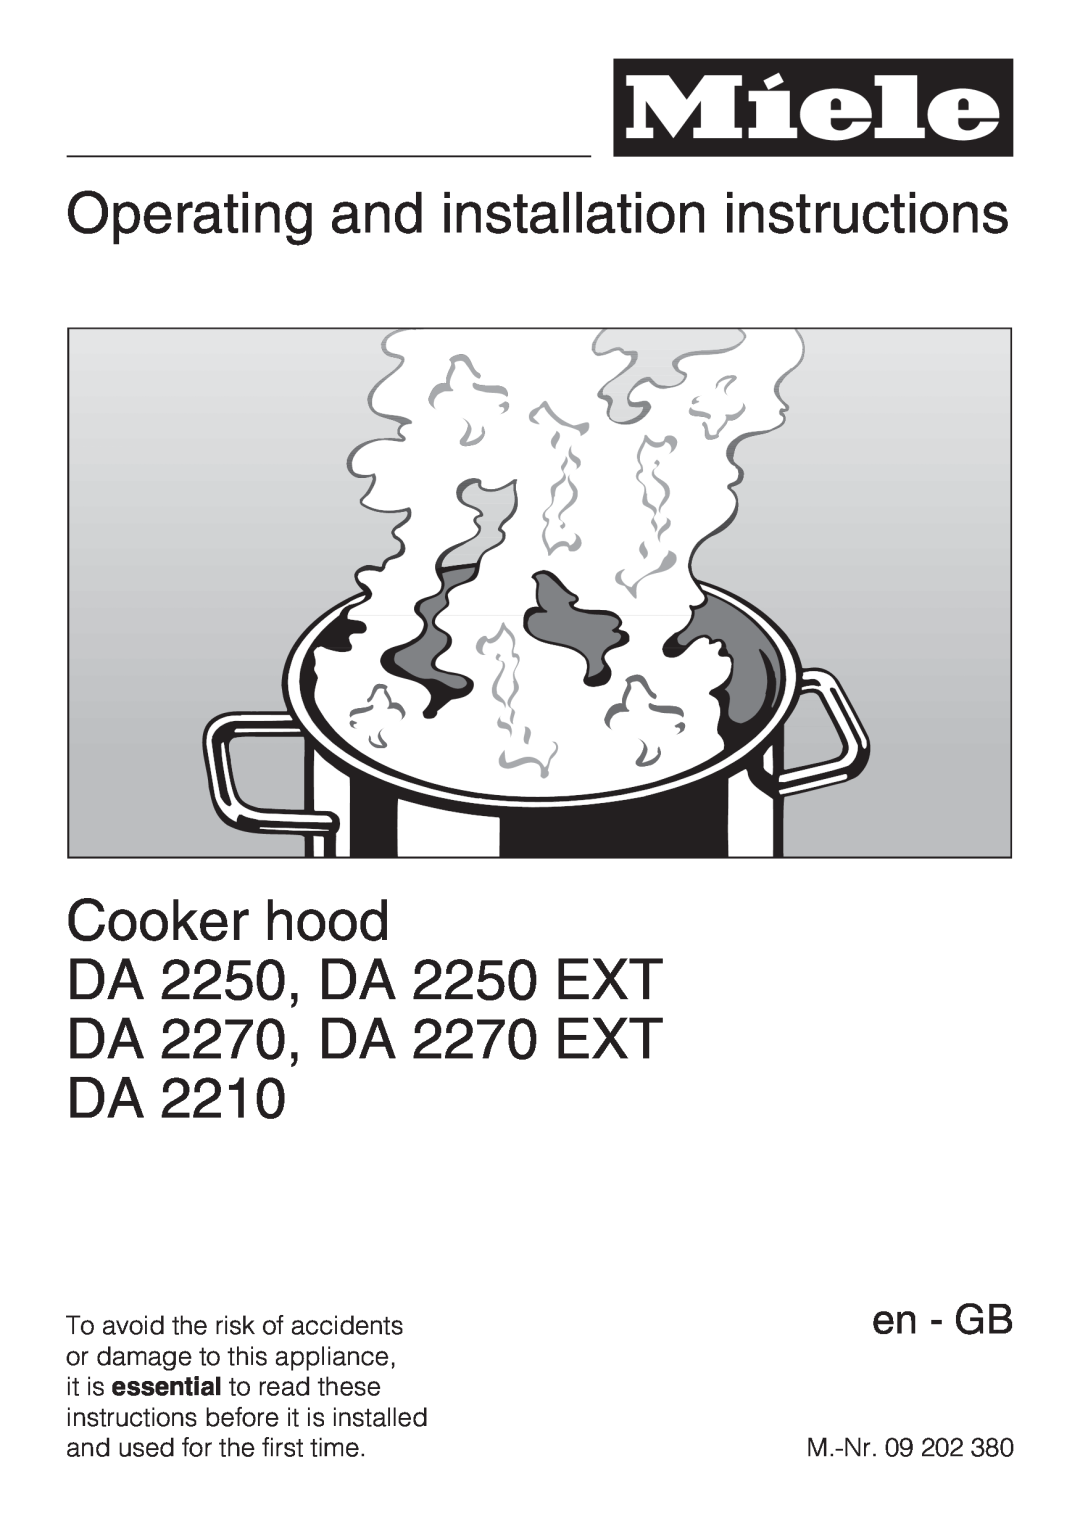 Miele DA 2270 installation instructions Operating and installation instructions, Cooker hood DA 2250, DA 2250 EXT, en - GB 